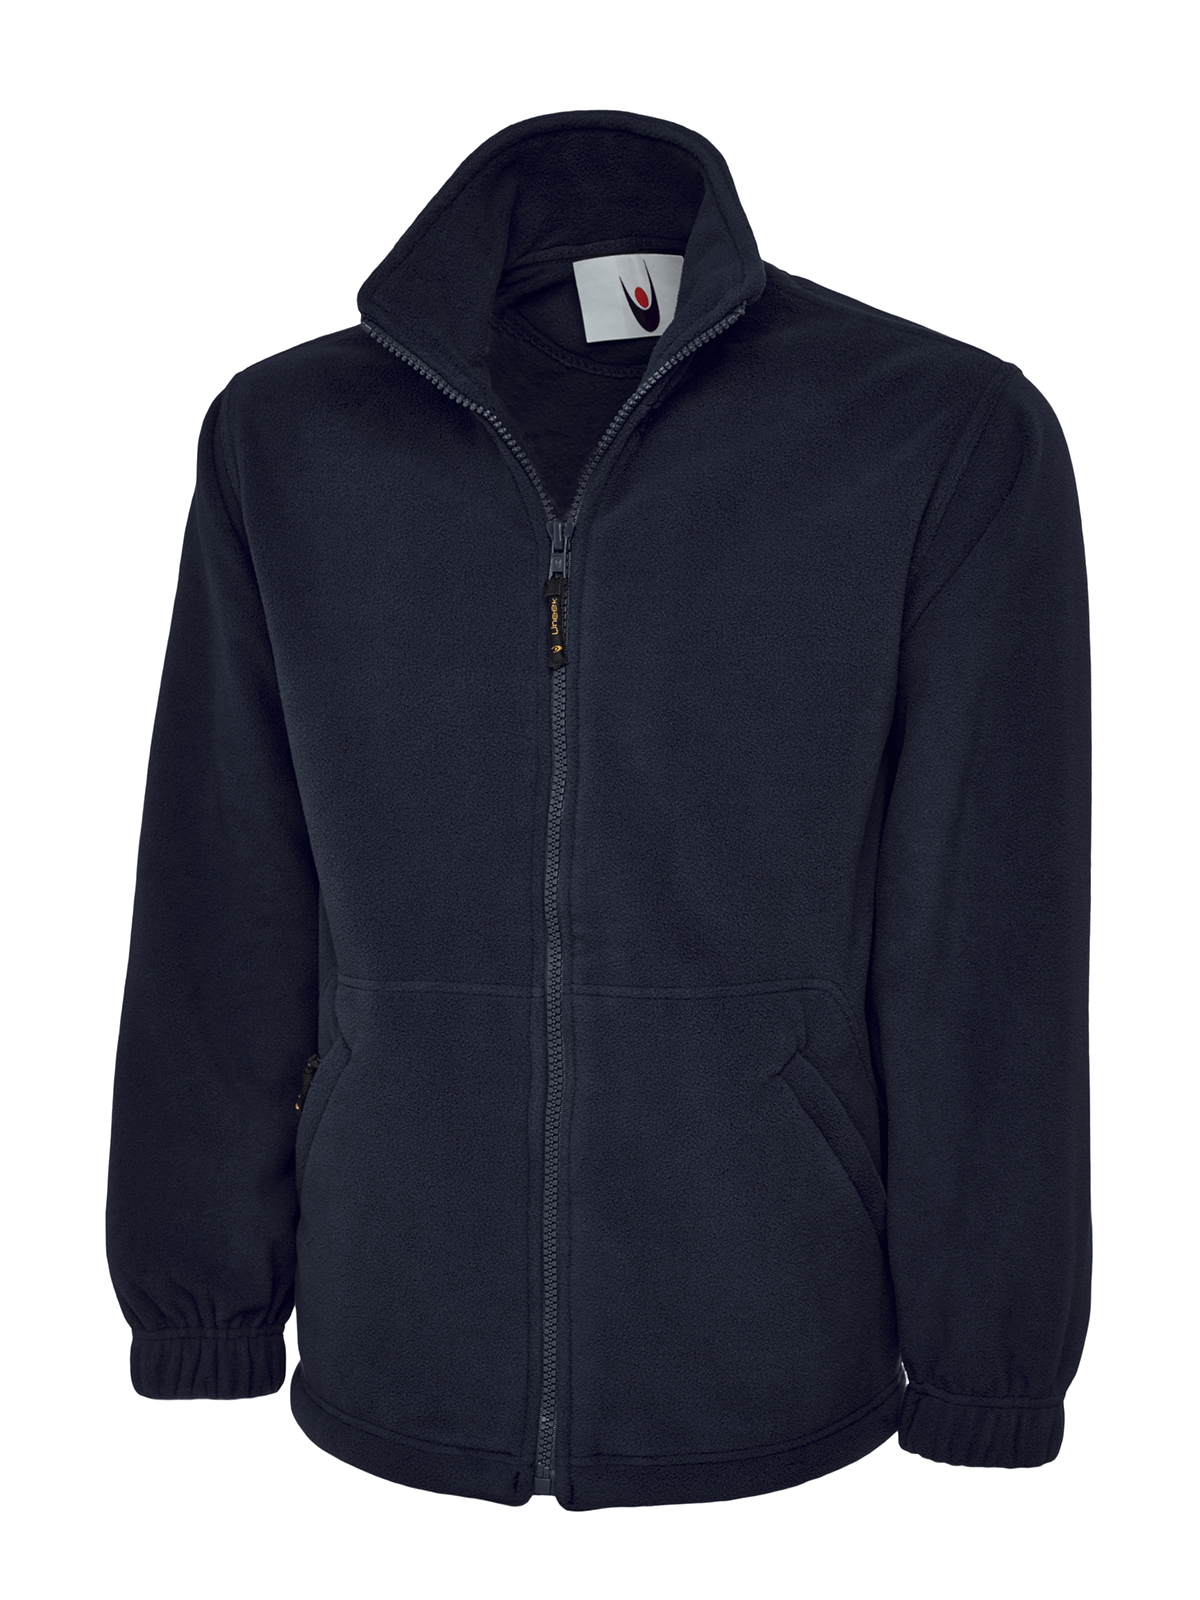 Full Zip Fleece Jacket, Navy - Size Small